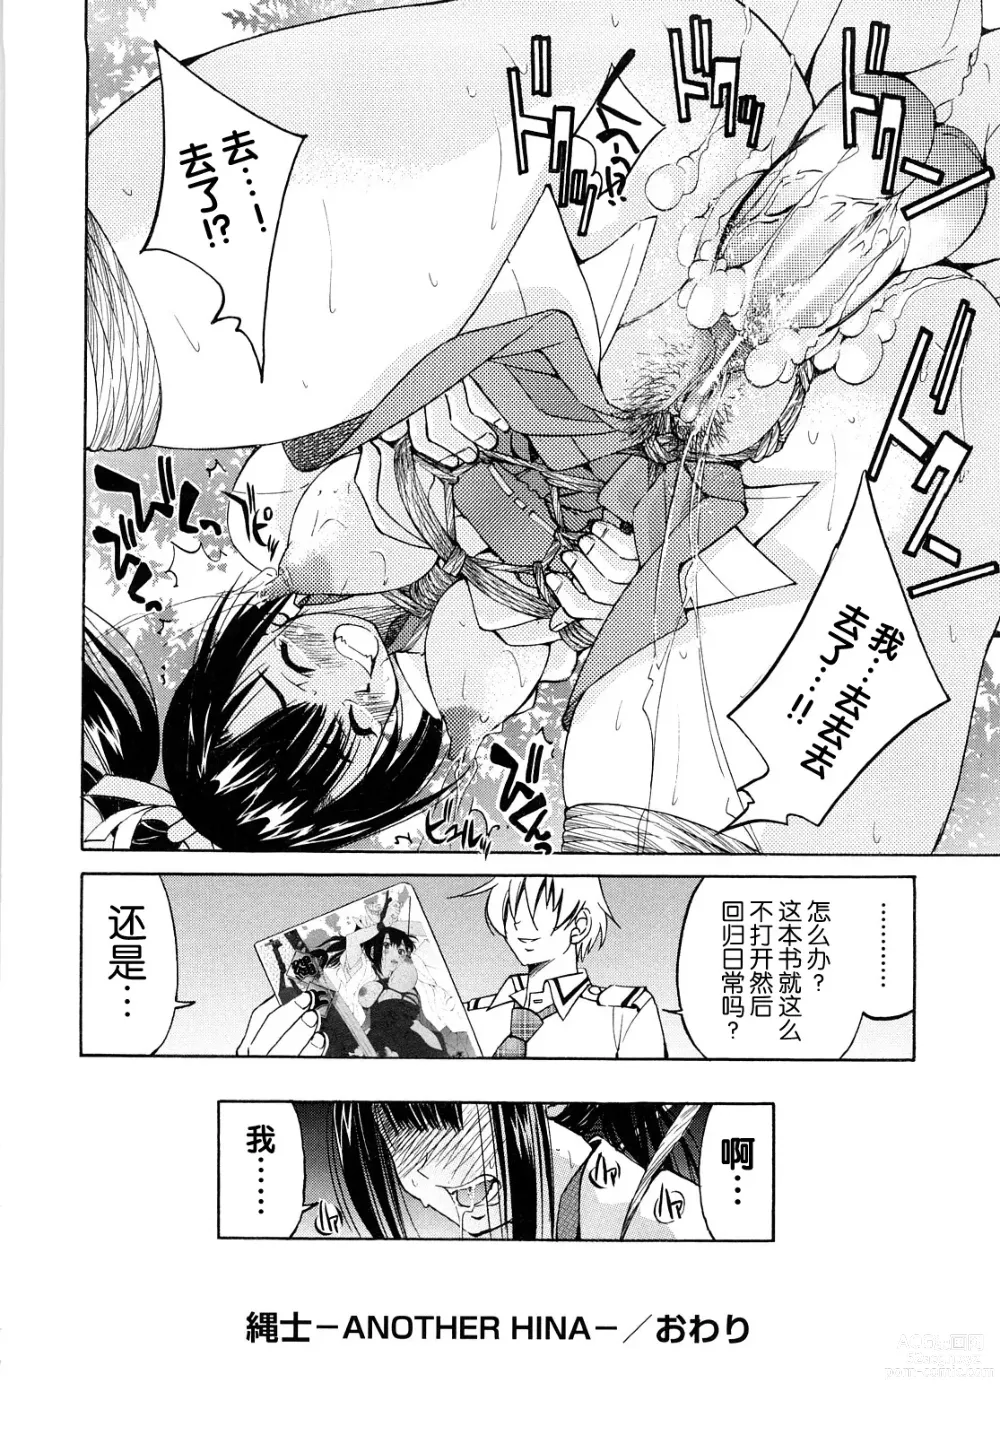 Page 211 of manga Shibarare Hime